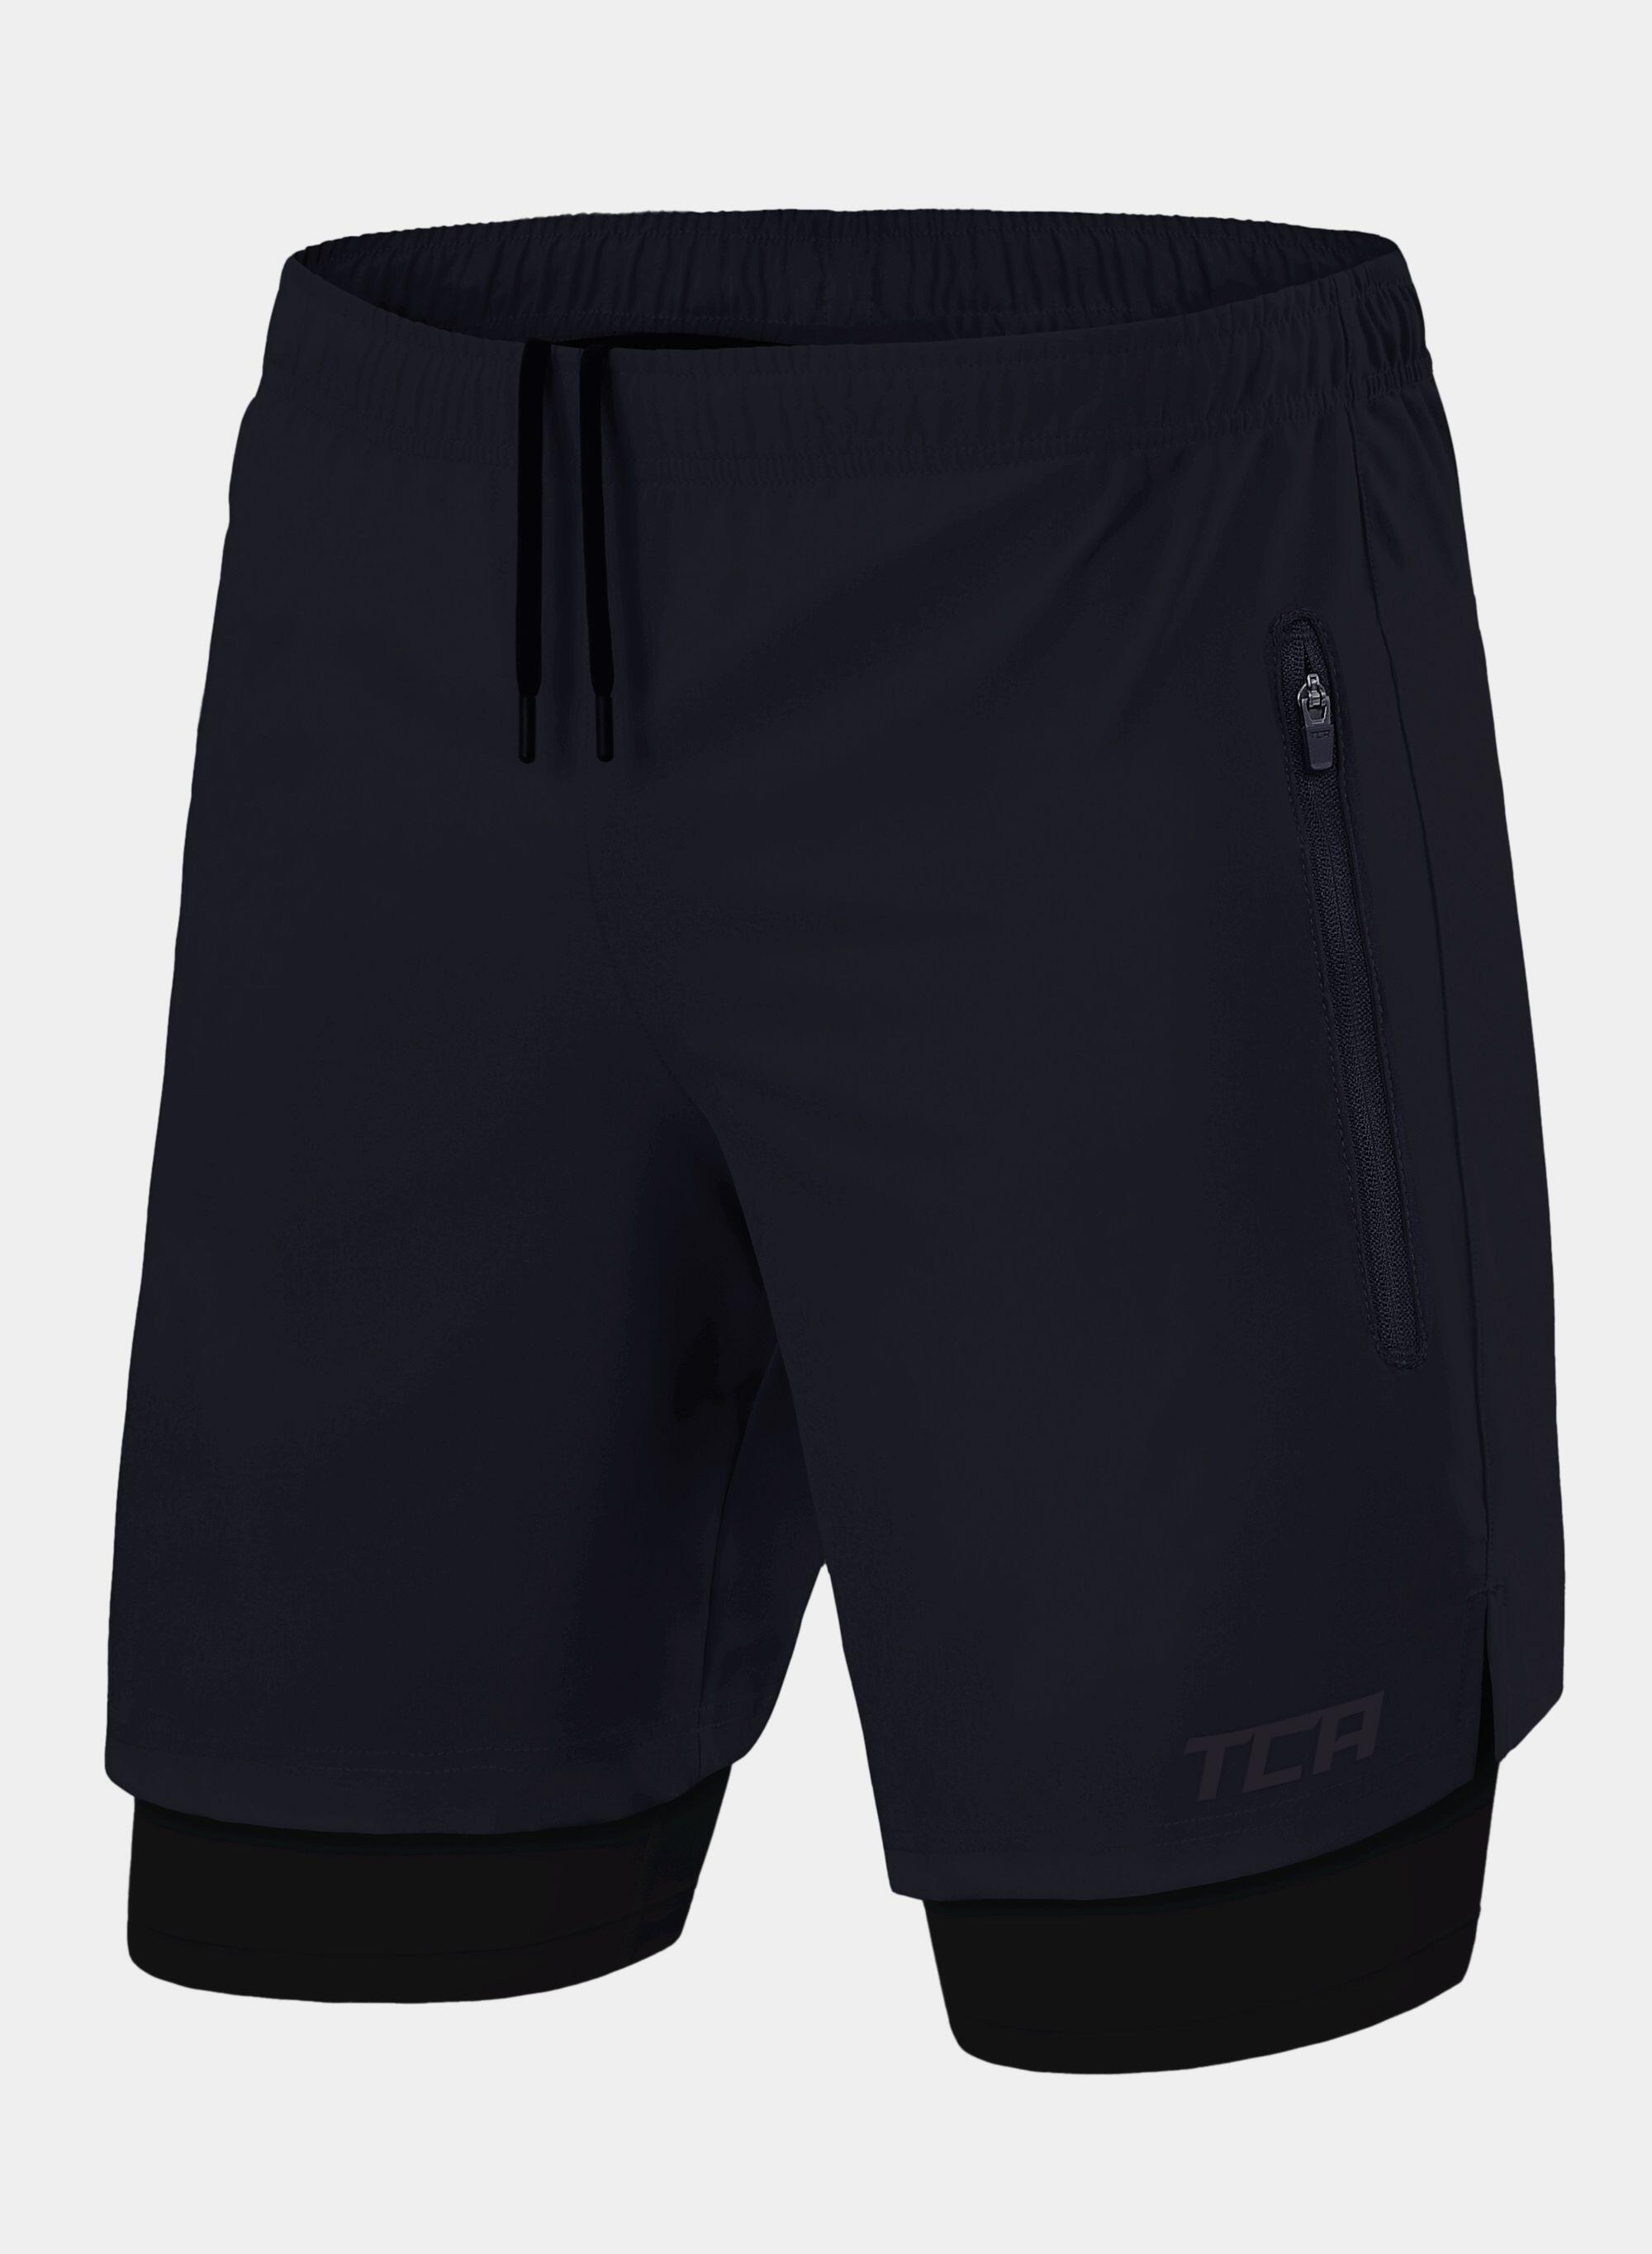 TCA Men's Ultra 2-in-1 Running Shorts with Zip Pockets - Navy/Black